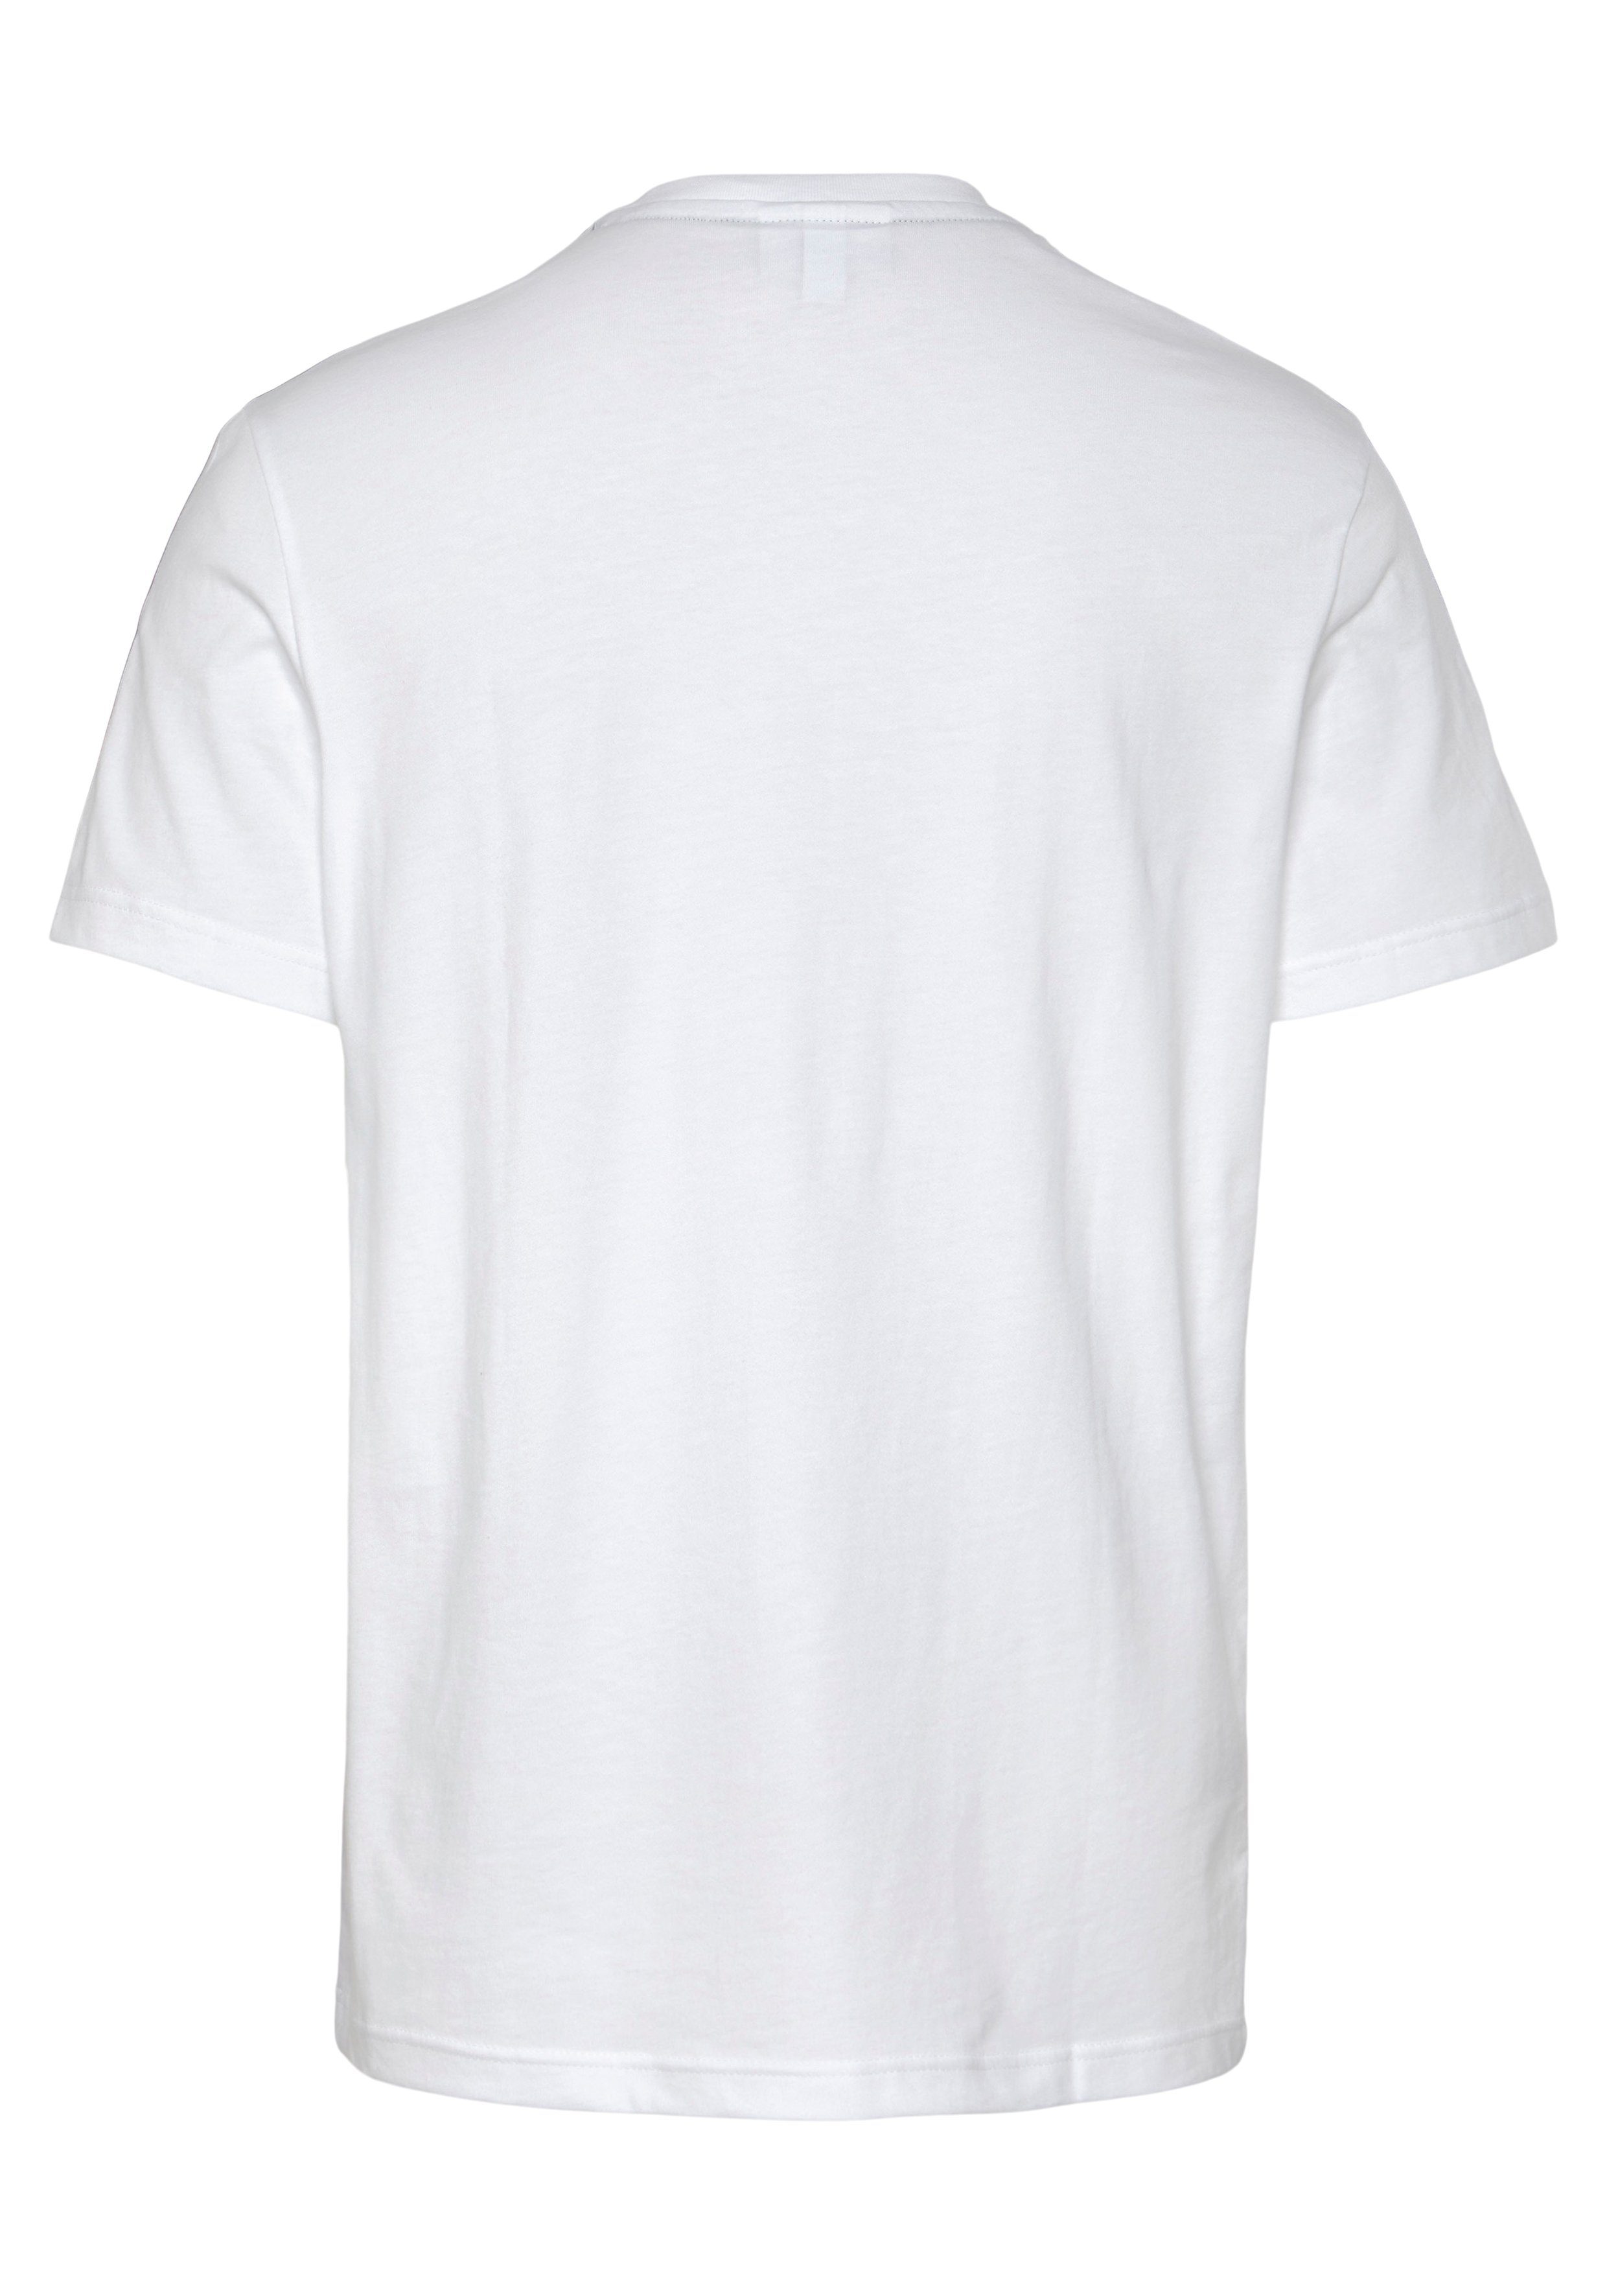 T-Shirt an mit den white Kontrastband Schultern beschriftetem Lacoste